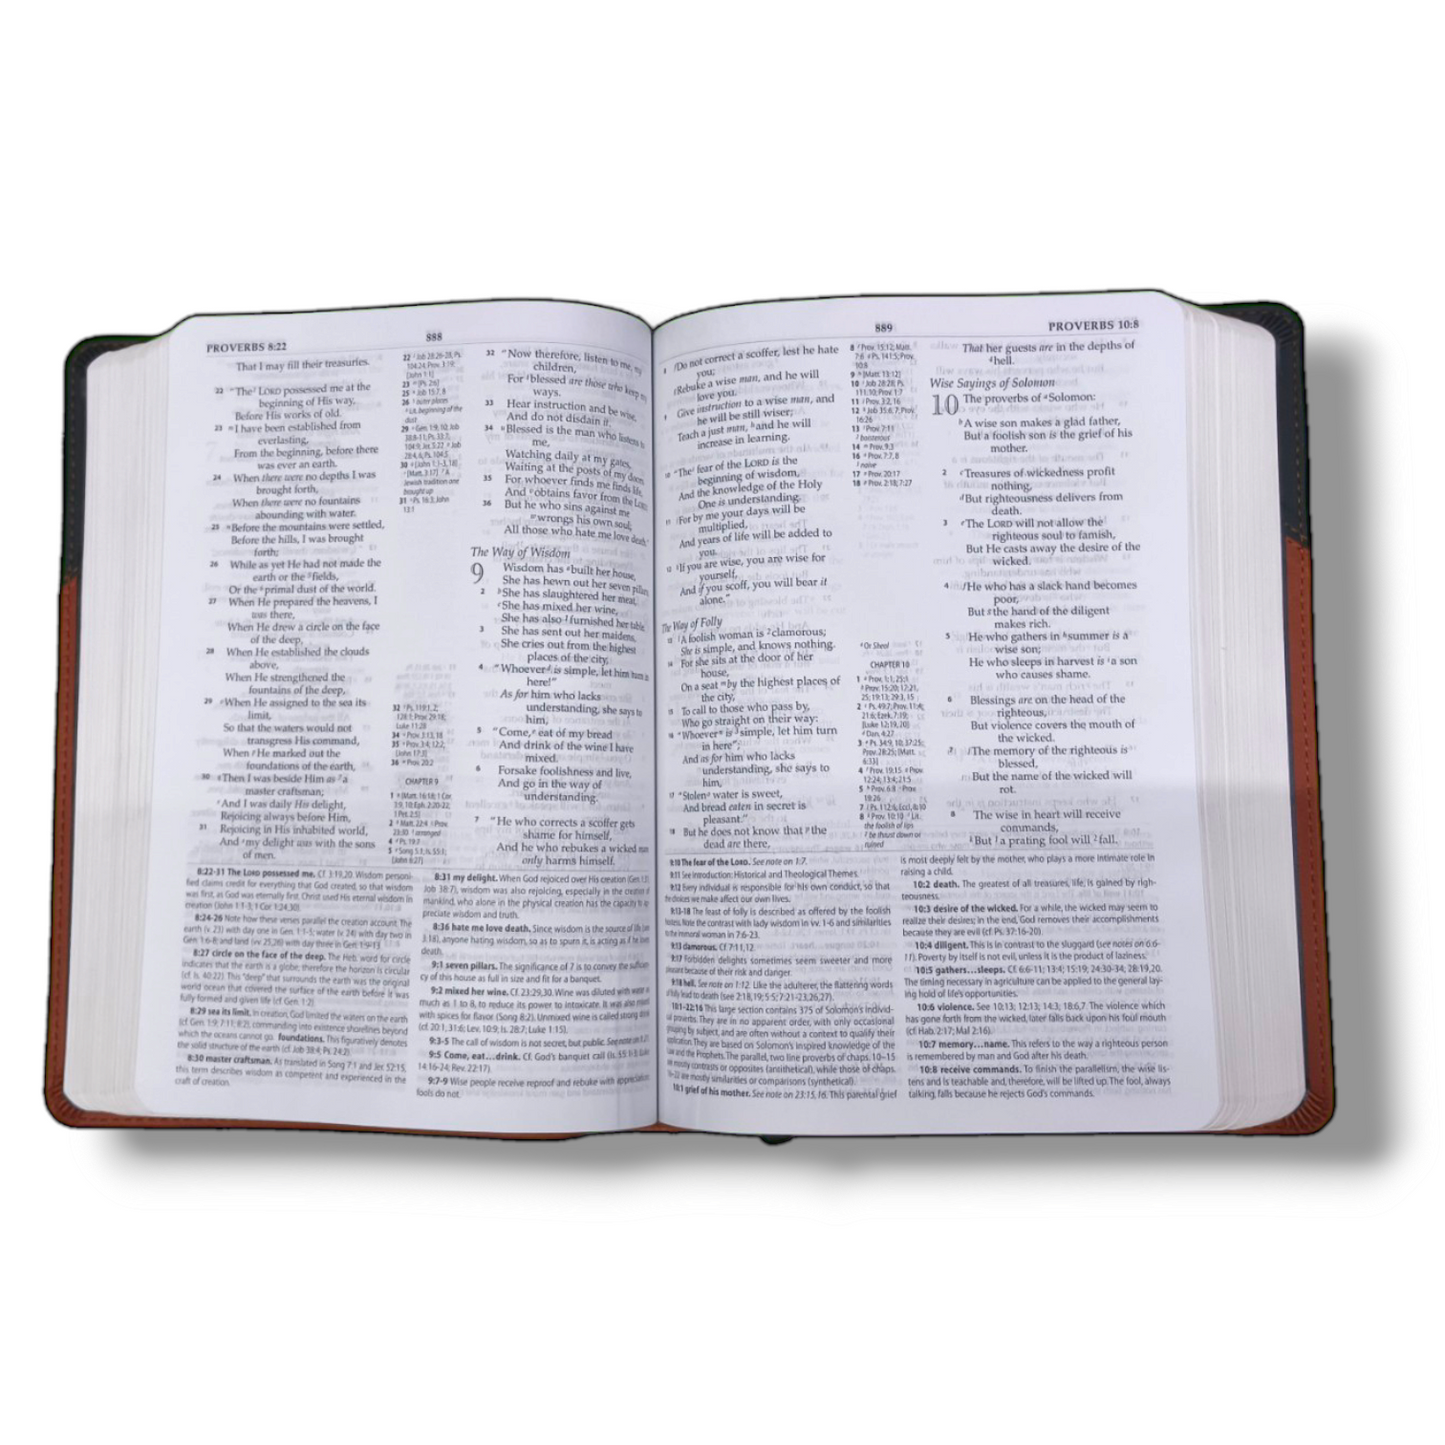 The MacArthur Study Bible | Large Print | Brown Tan Soft Imitation Leather | New King James Version |  New Edition